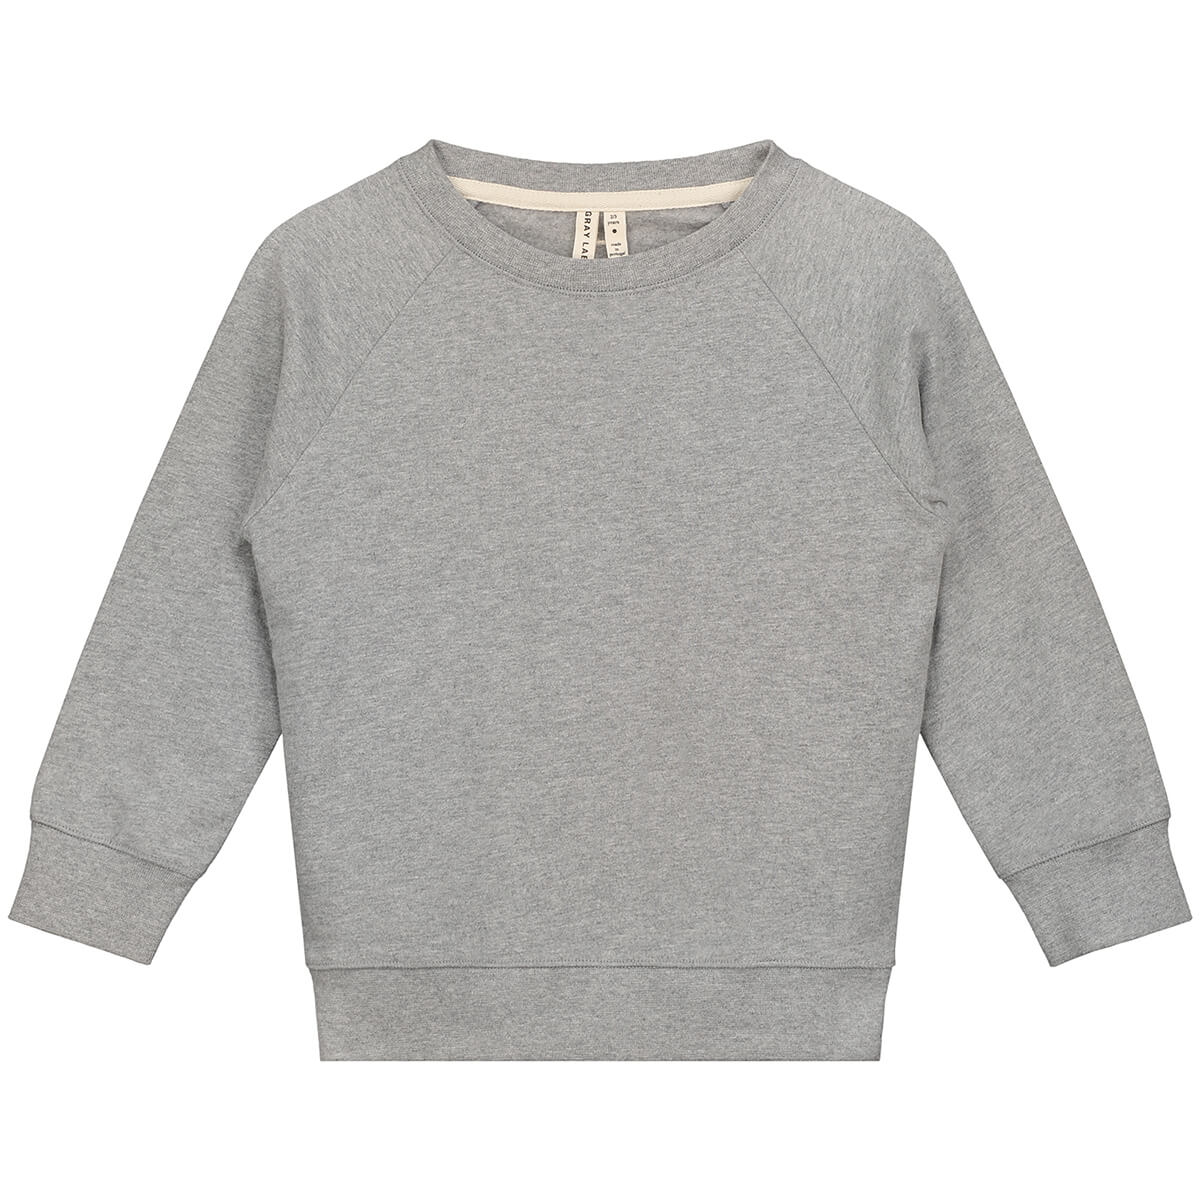 Crew Neck Sweater in Grey Melange by Gray Label – Junior Edition